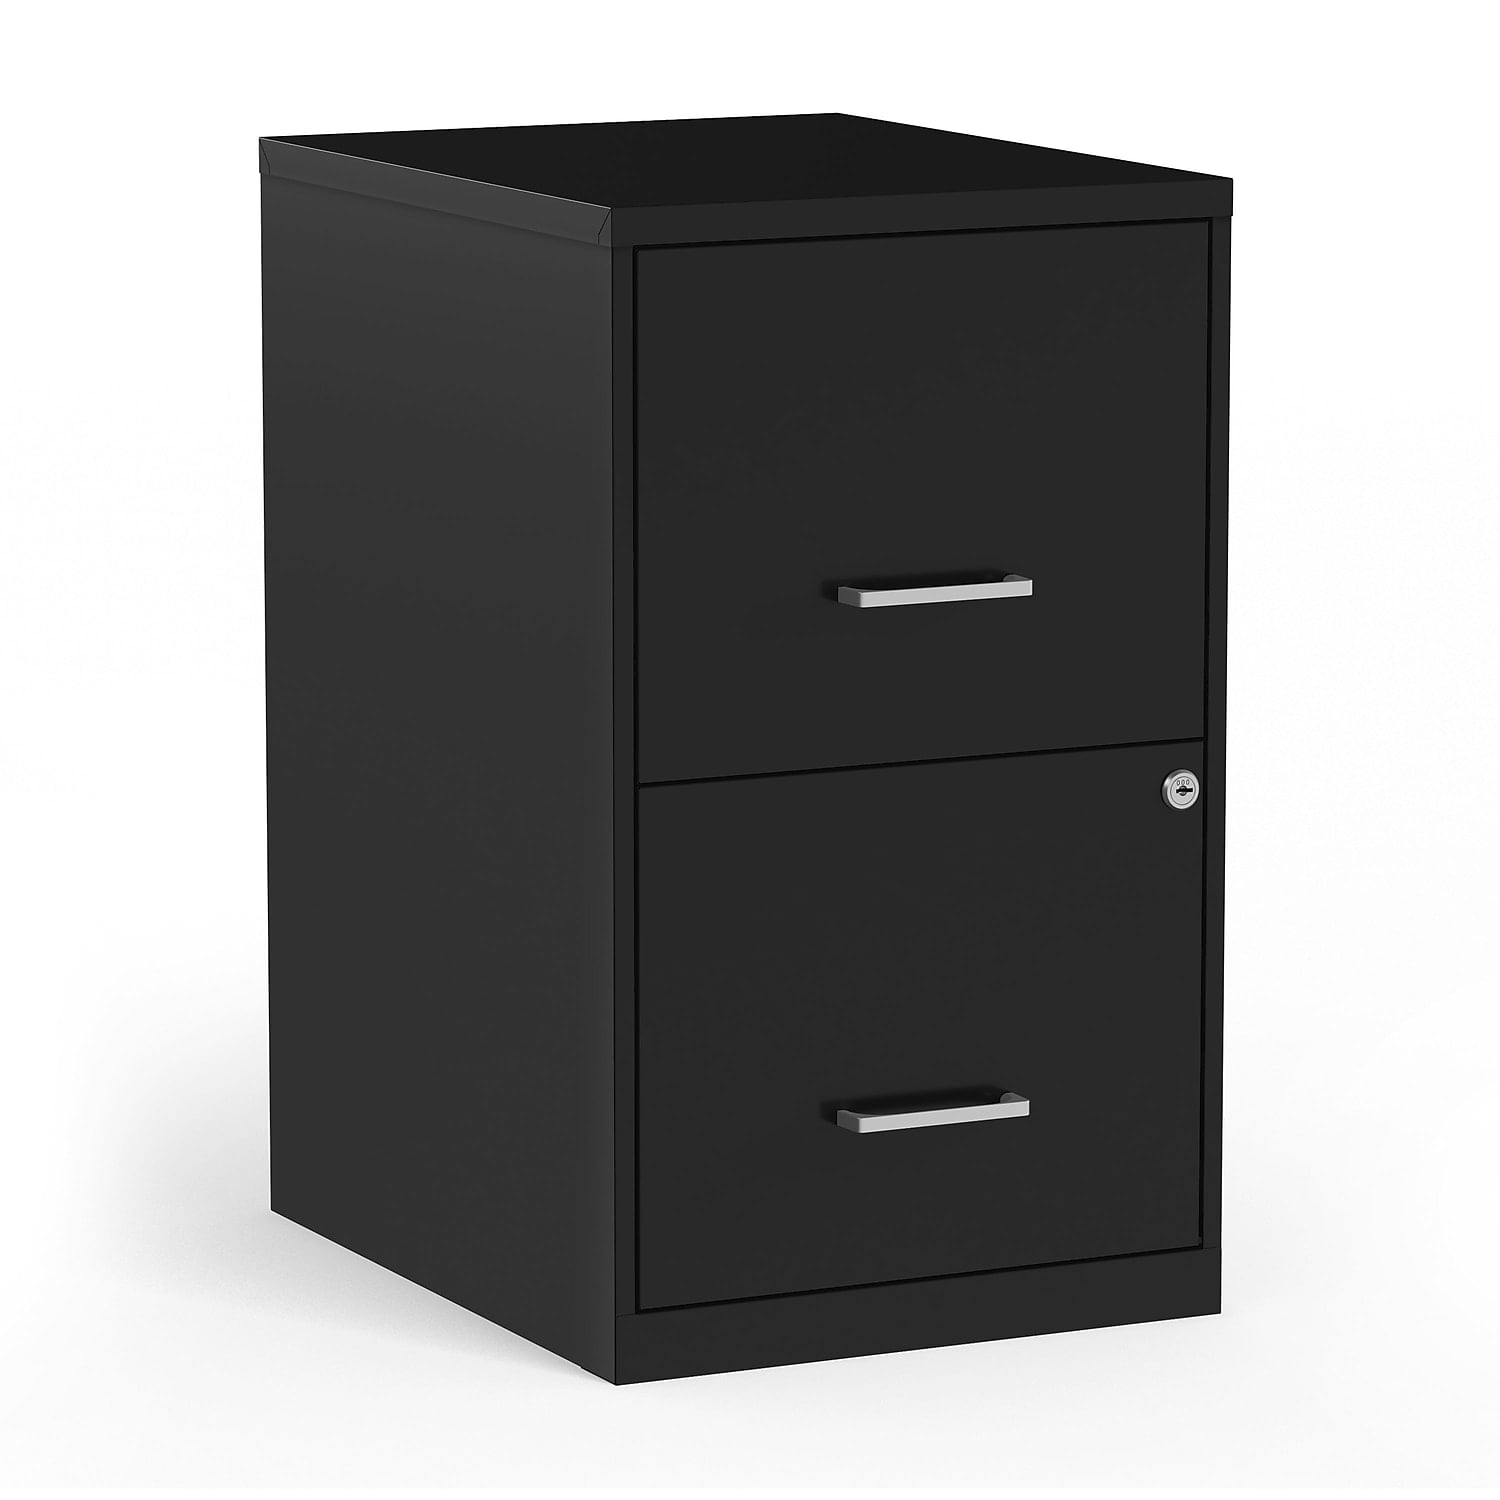 Details about   Yellow 2 drawer Desktop Metal Storage File Cabinet  4.25"x4.75"x7.25"H SS623Y 